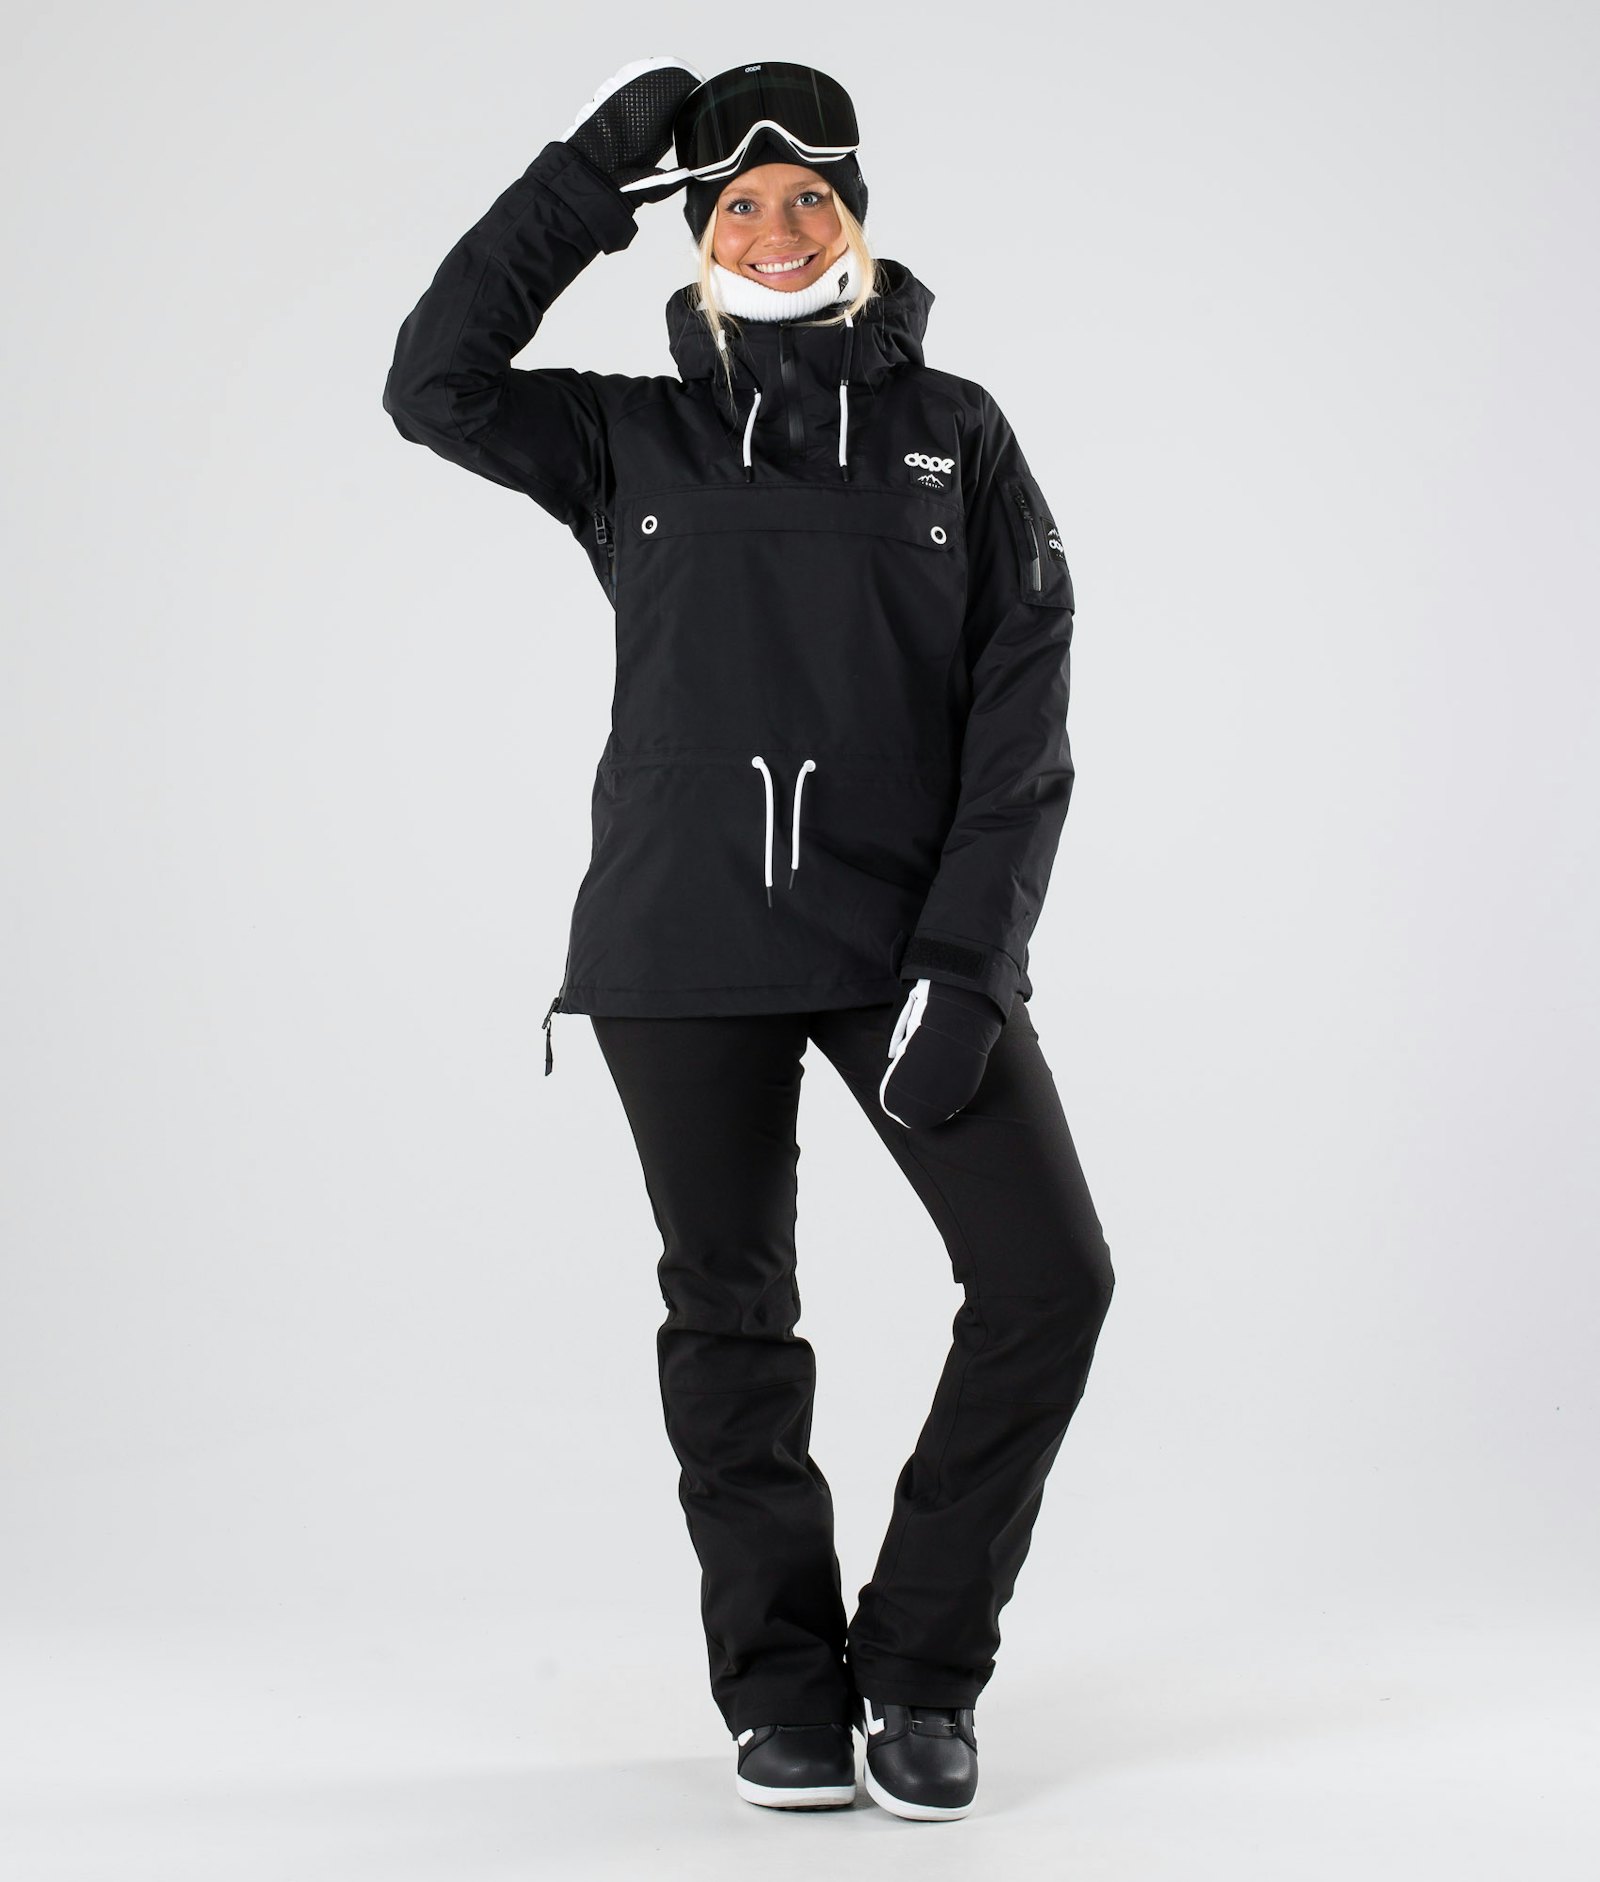 Annok W 2019 Chaqueta Snowboard Mujer Black